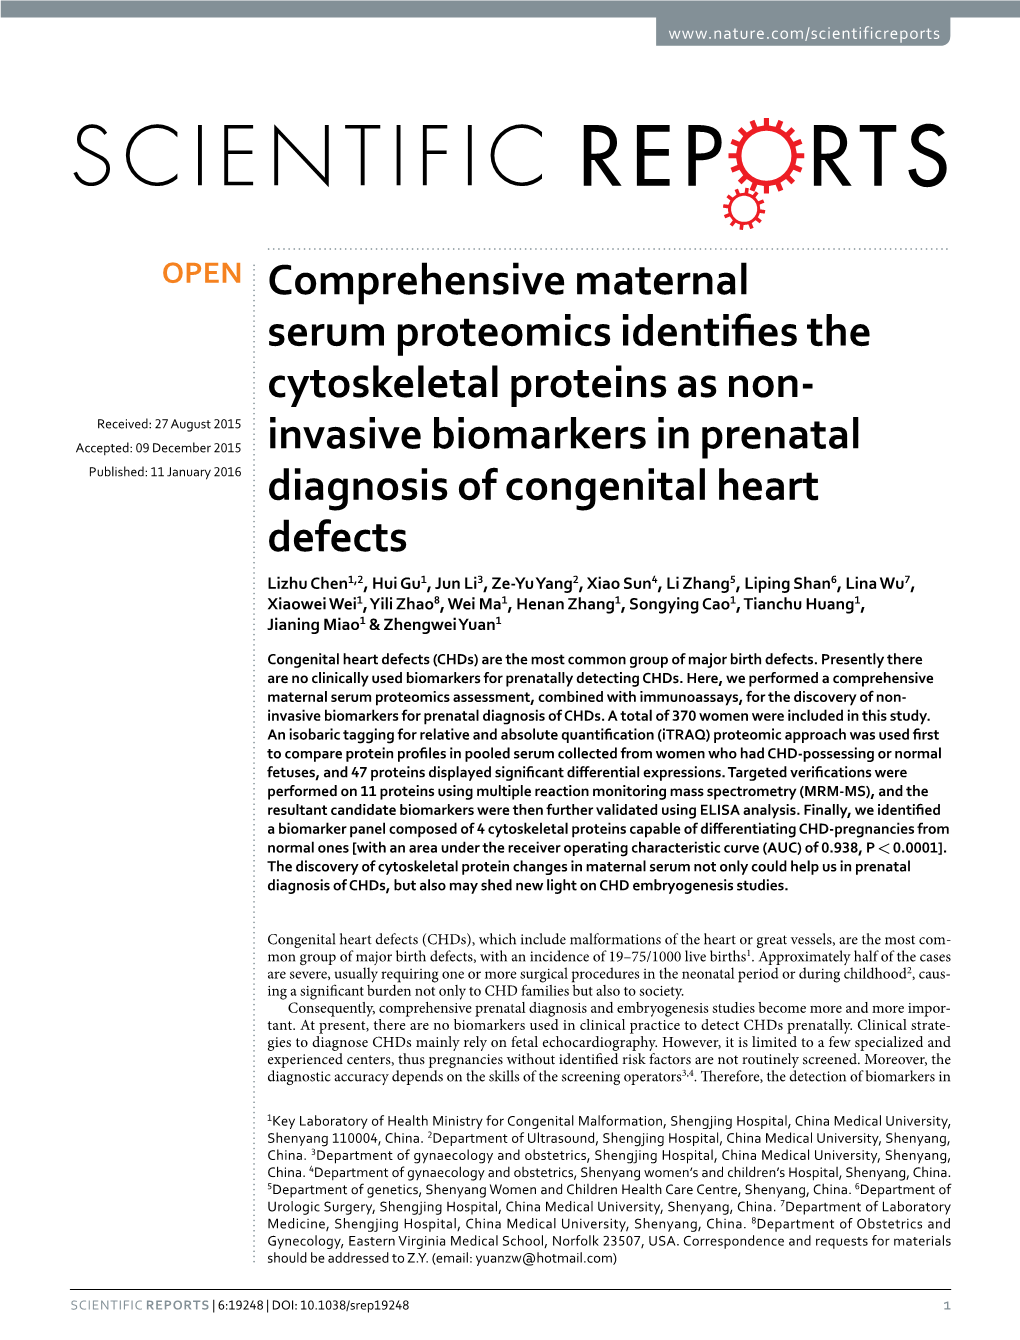 Comprehensive Maternal Serum Proteomics Identifies The